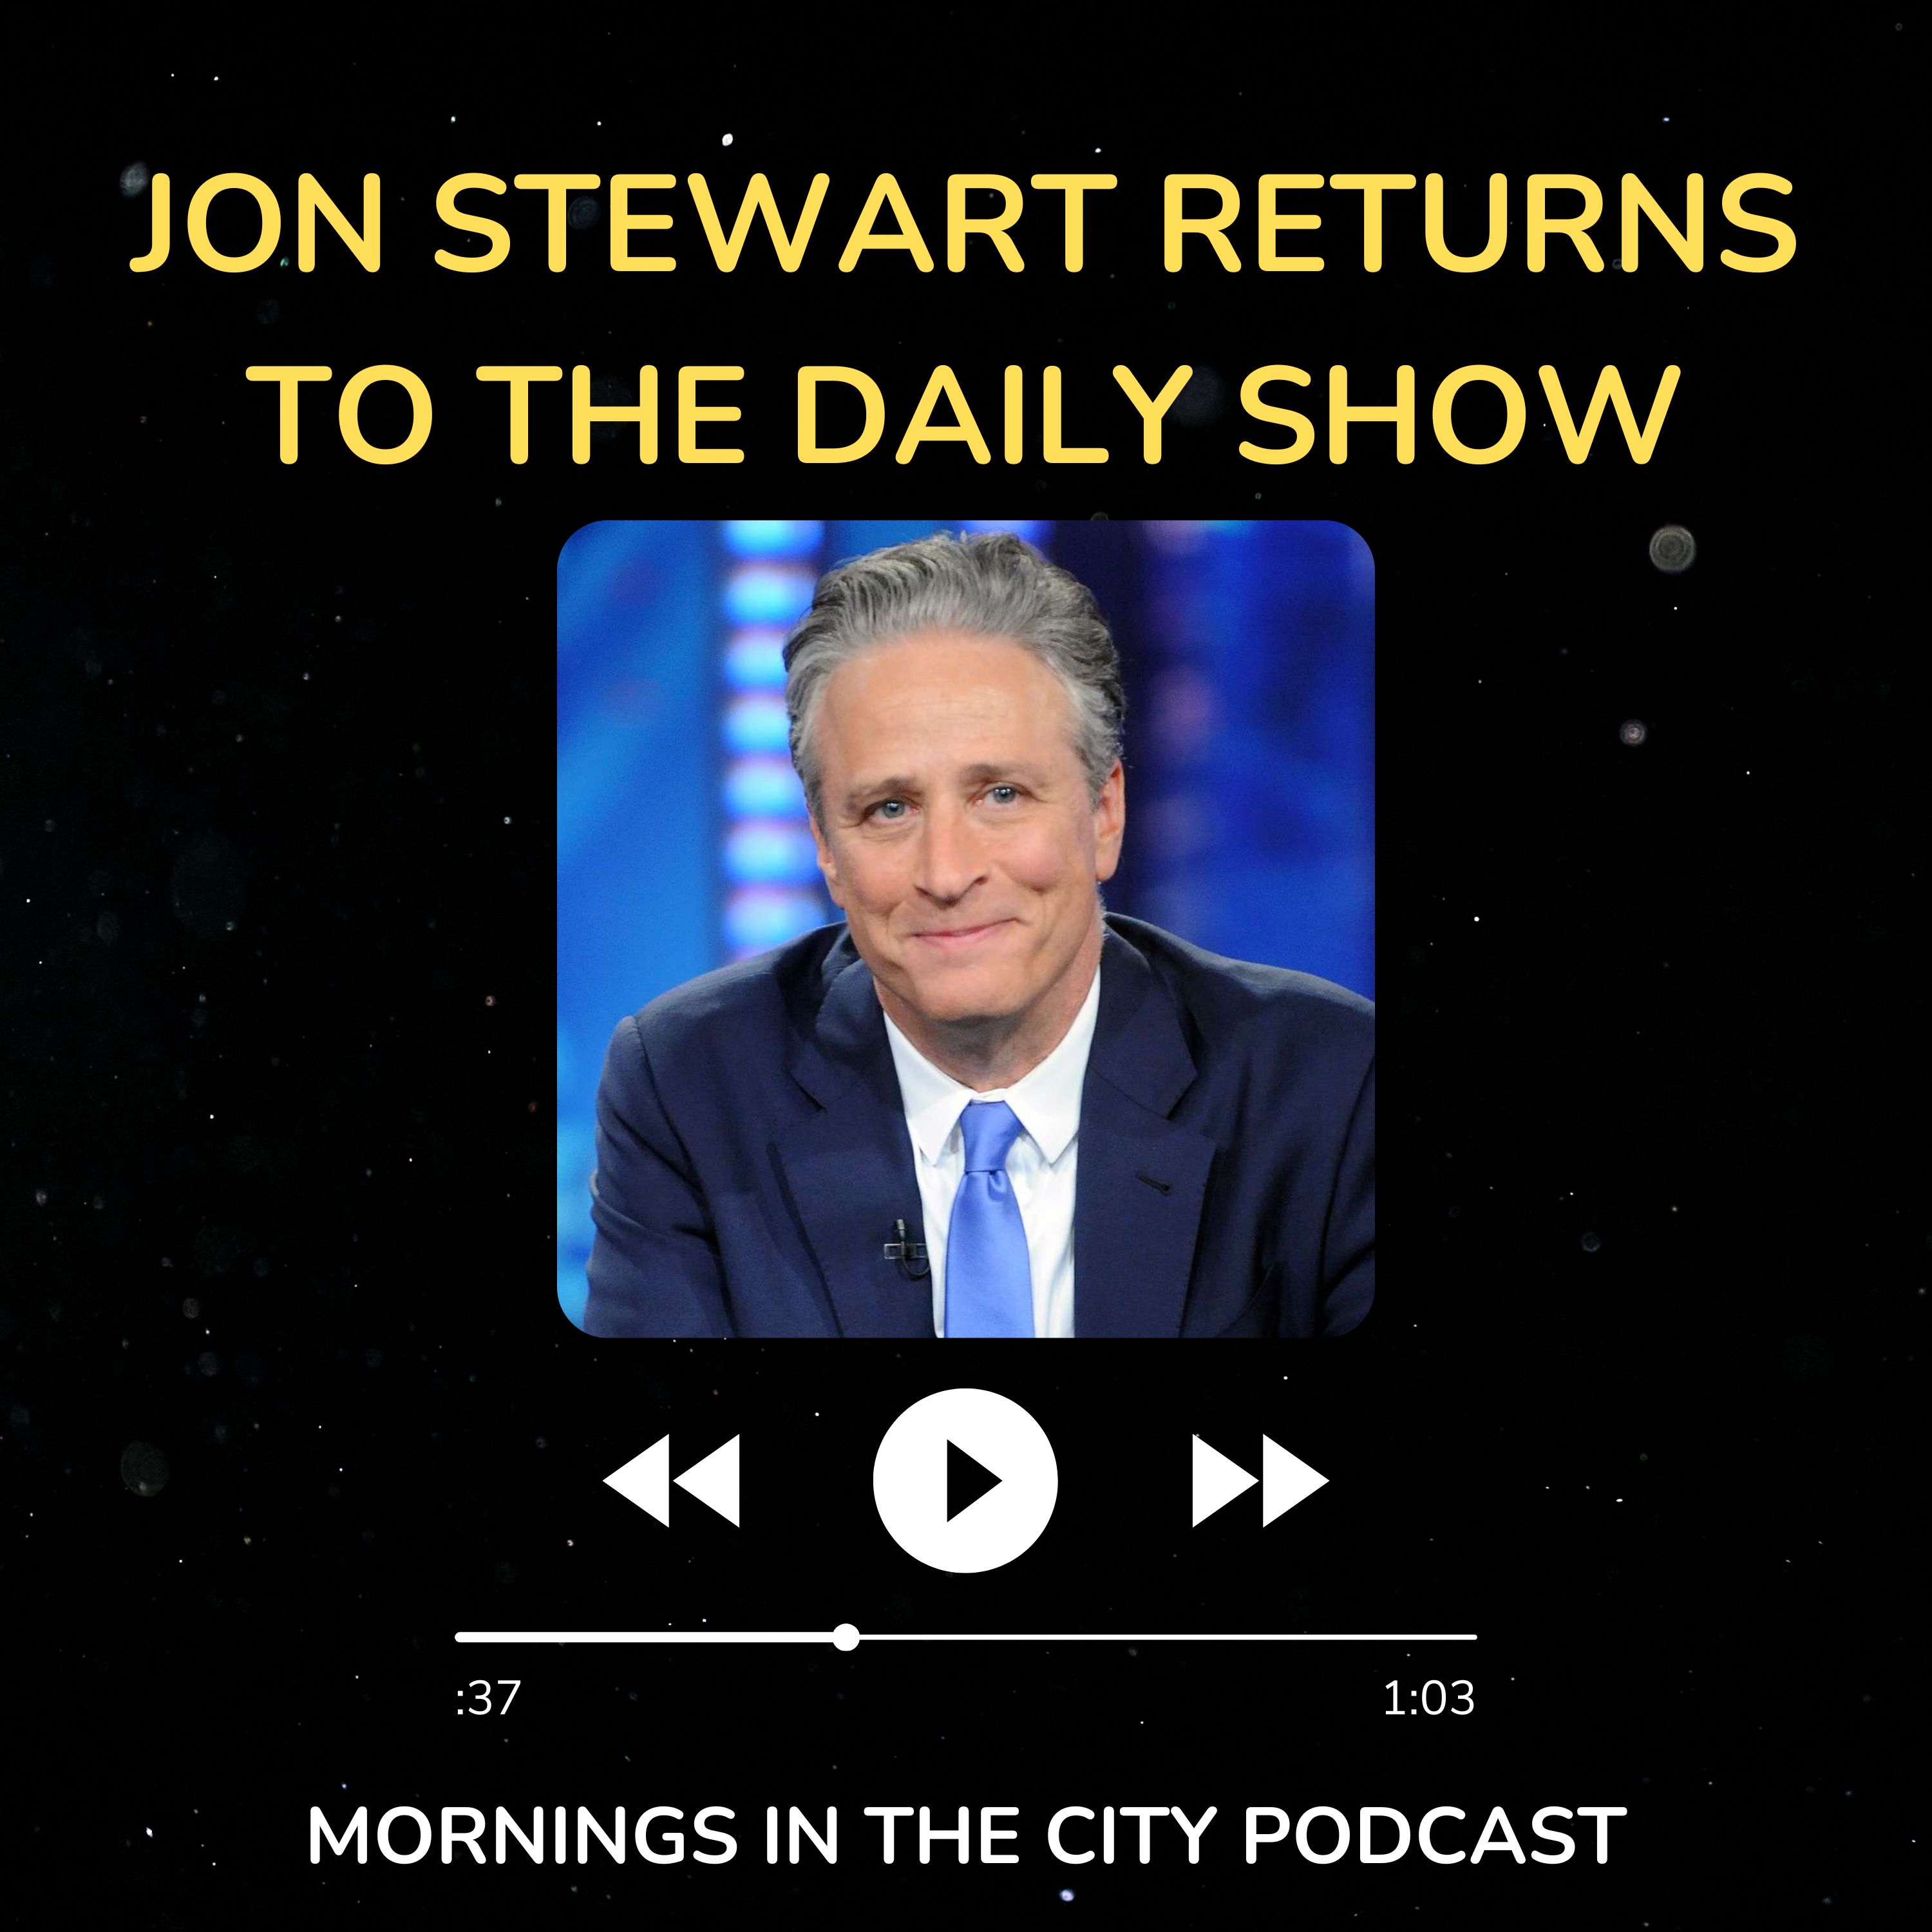 Jon Stewart Returns to Host The Daily Show On Mondays